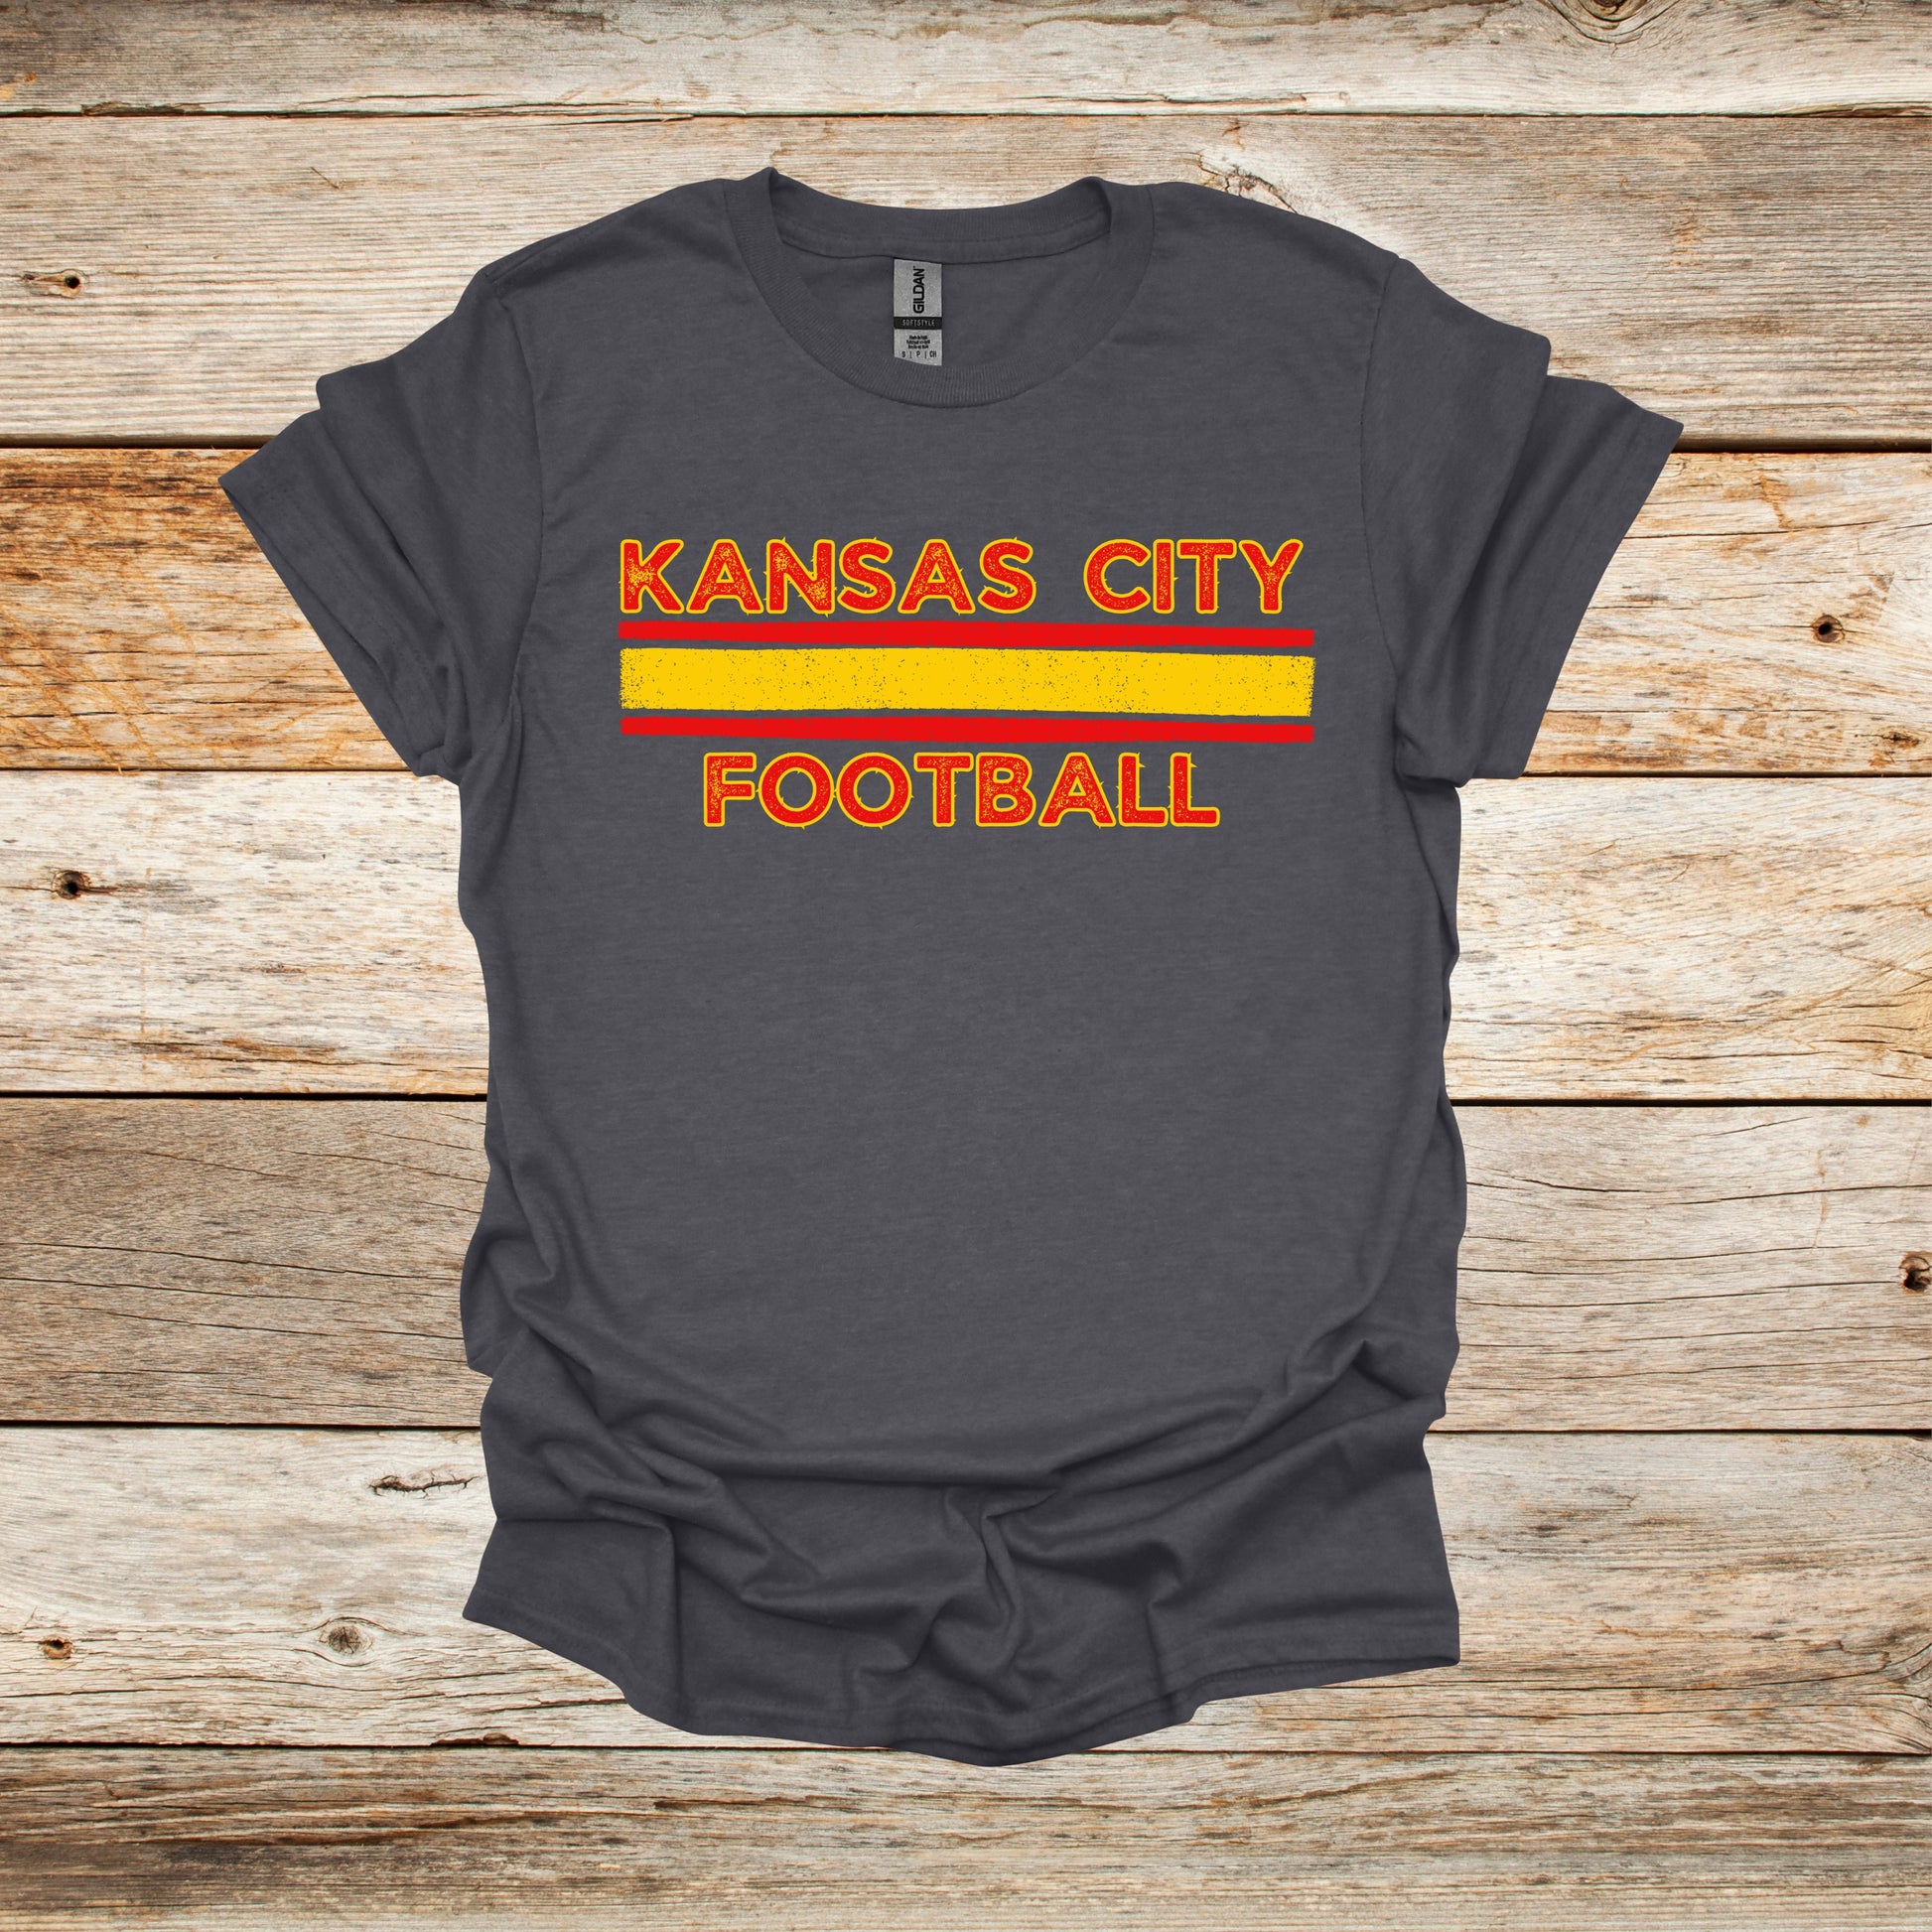 Football T-Shirt - Kansas City Chiefs - Kansas City Football - Adult and Children's Tee Shirts - Chiefs - Sports T-Shirts Graphic Avenue Dark Heather Adult Small 